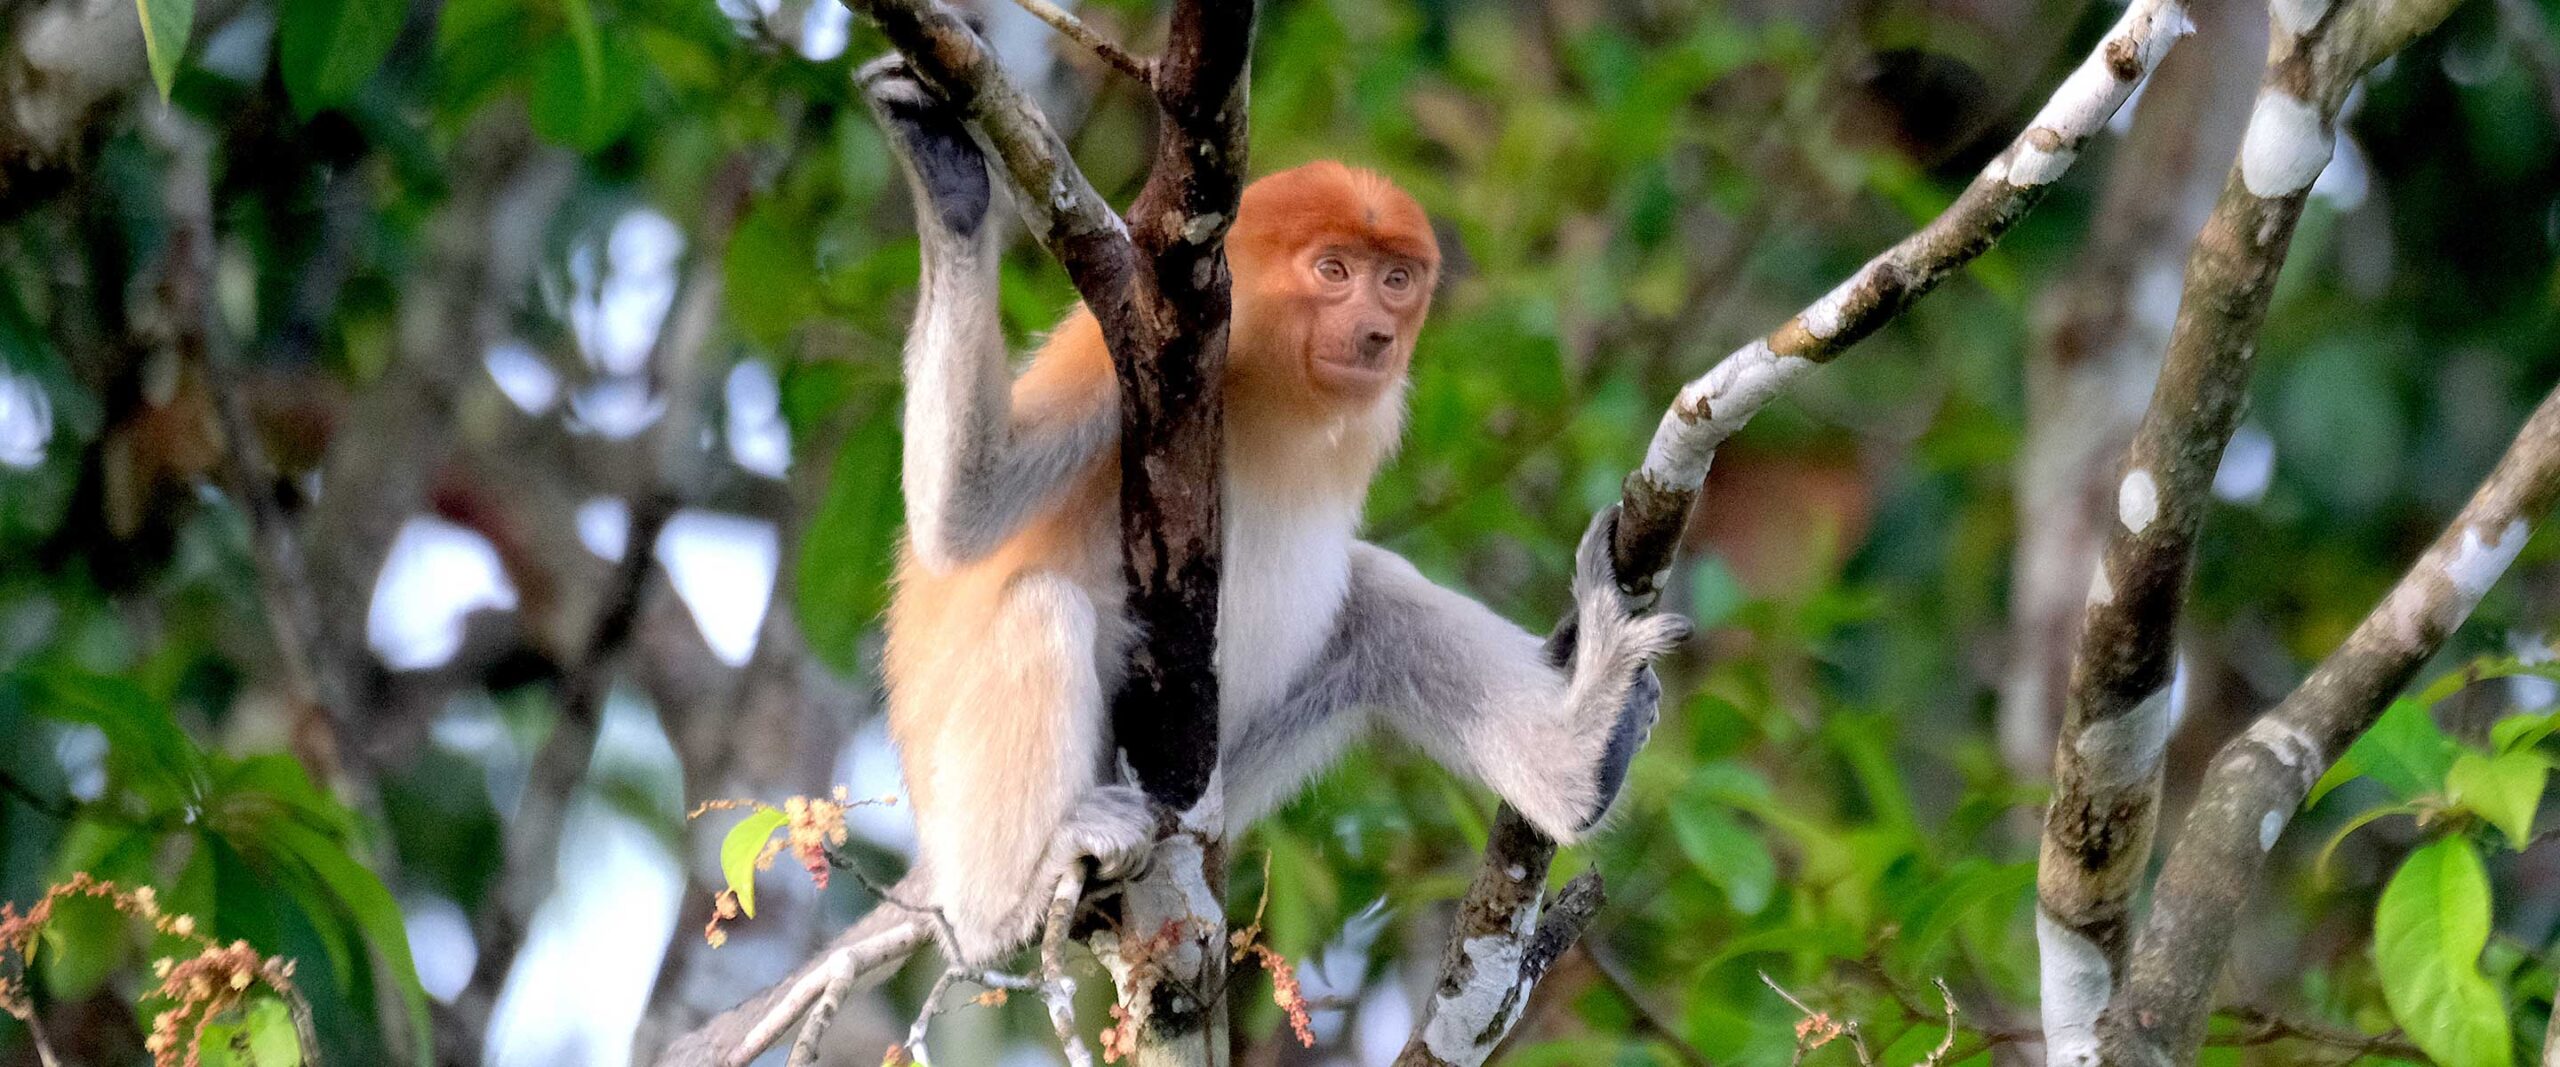 Proboscis monkey in Indonesia Katingan Mentaya carbon offset project